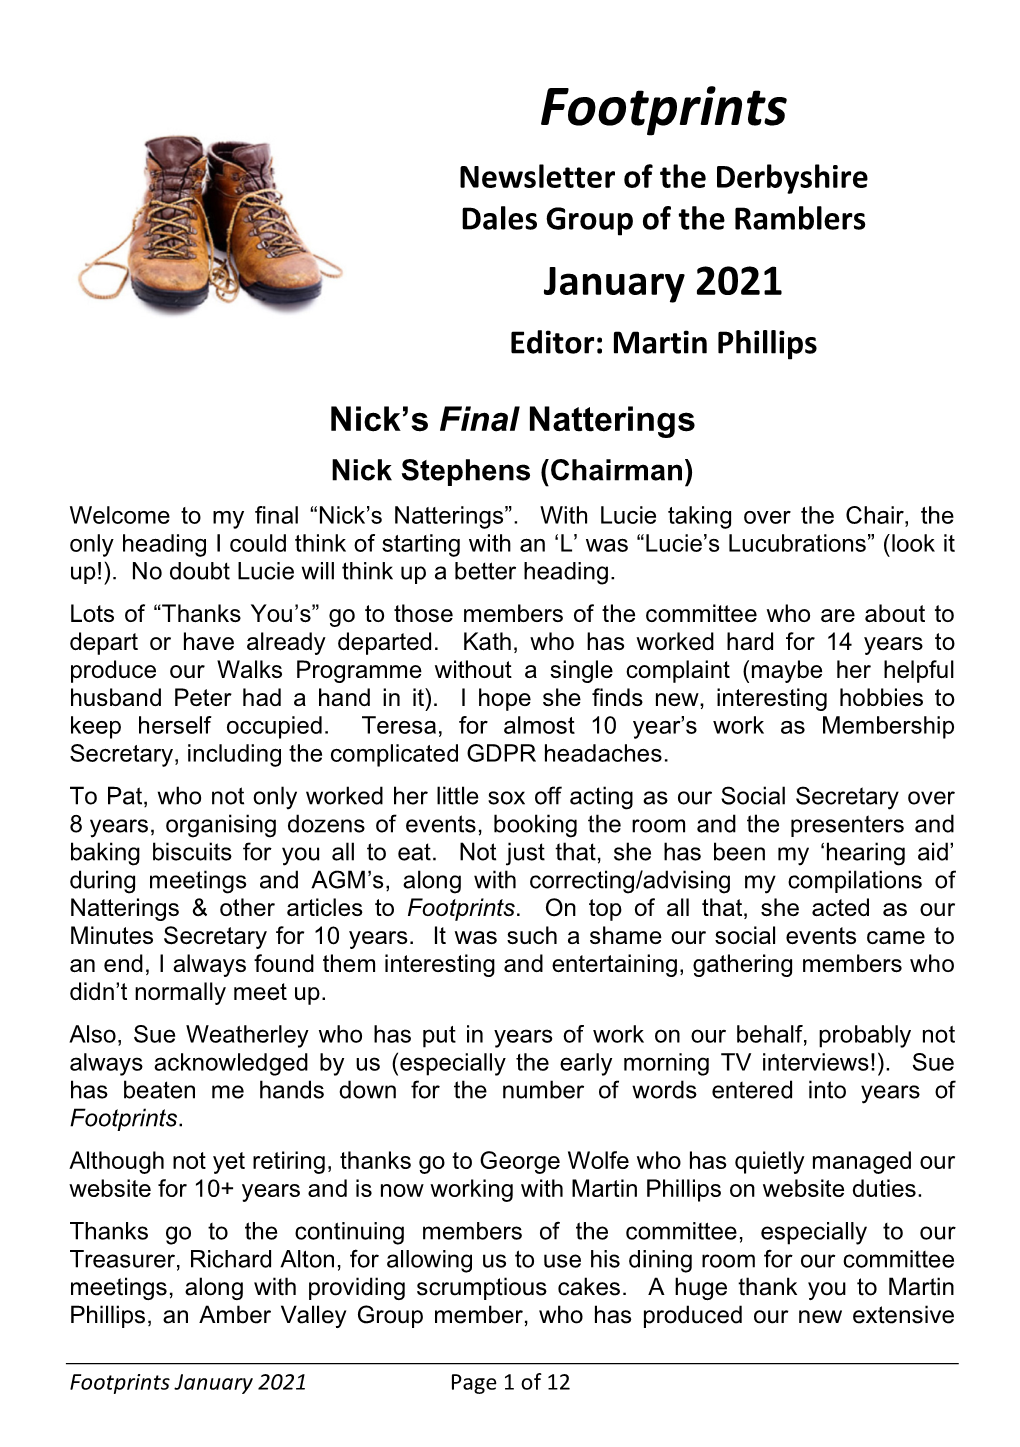 Footprints 2021 January.Pdf